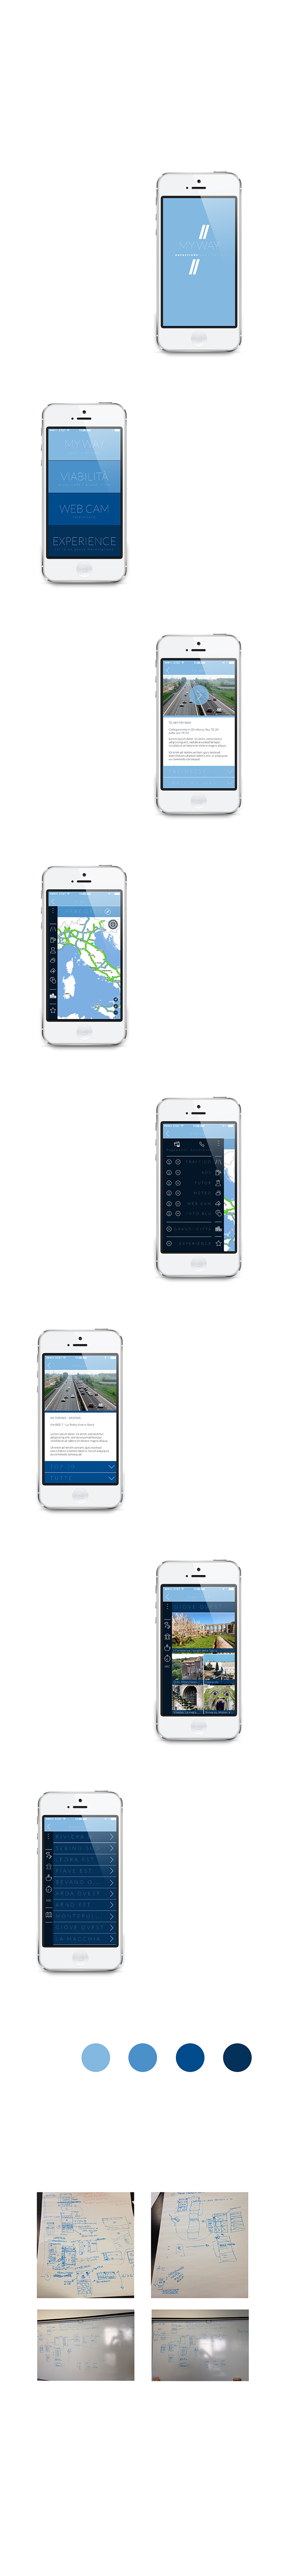 app iphone ios7 flat design traffic map application mobile autostrade italia contest